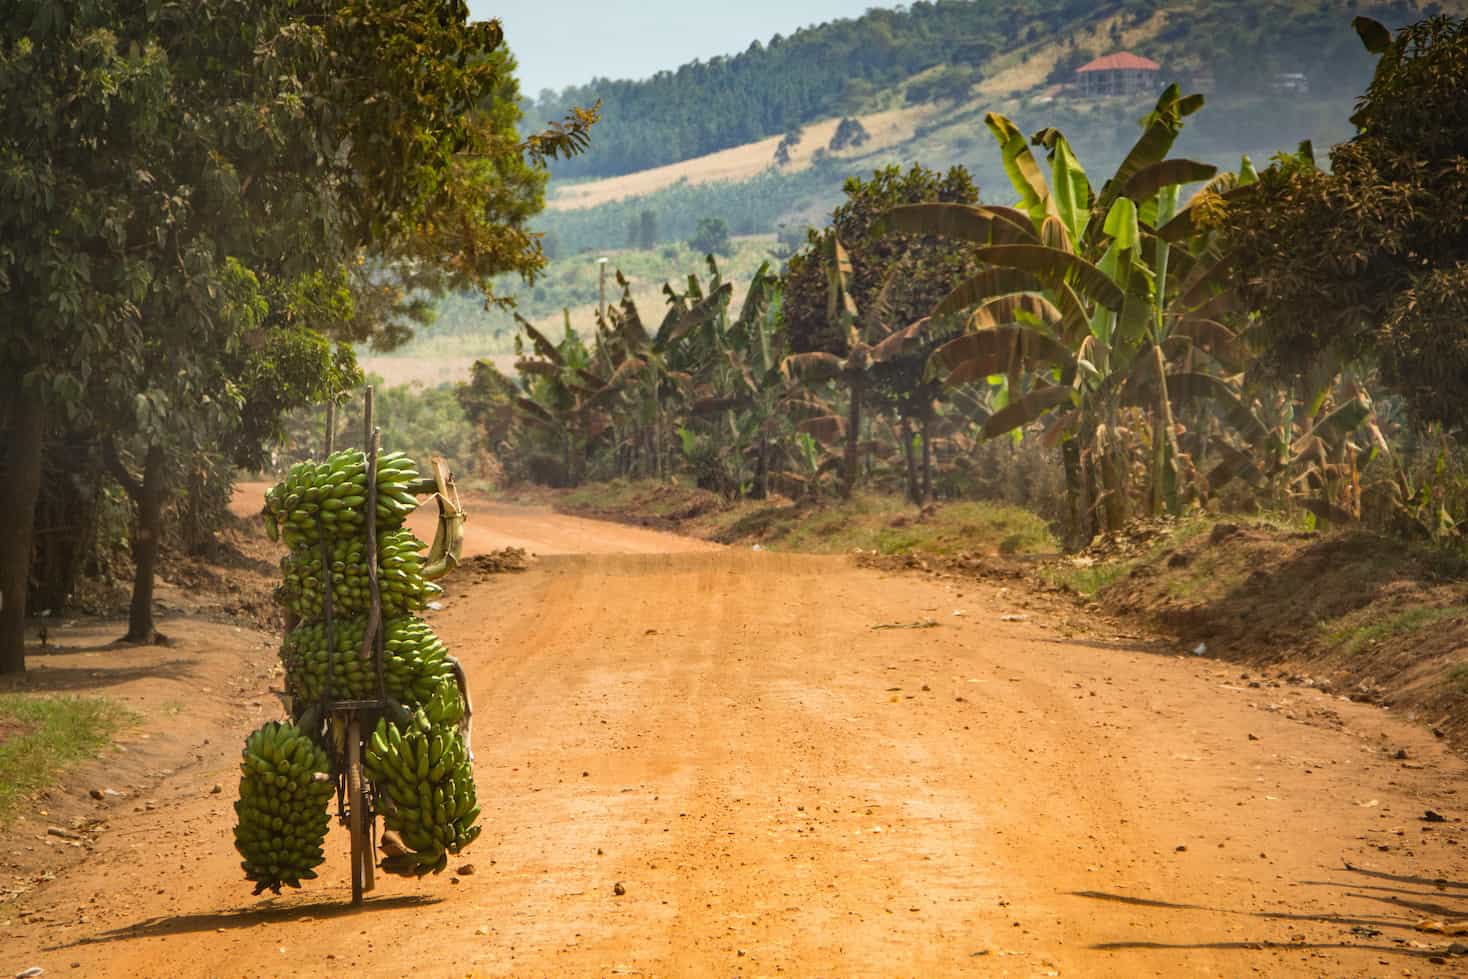 Bicycle of bananas on Uganda road Africa